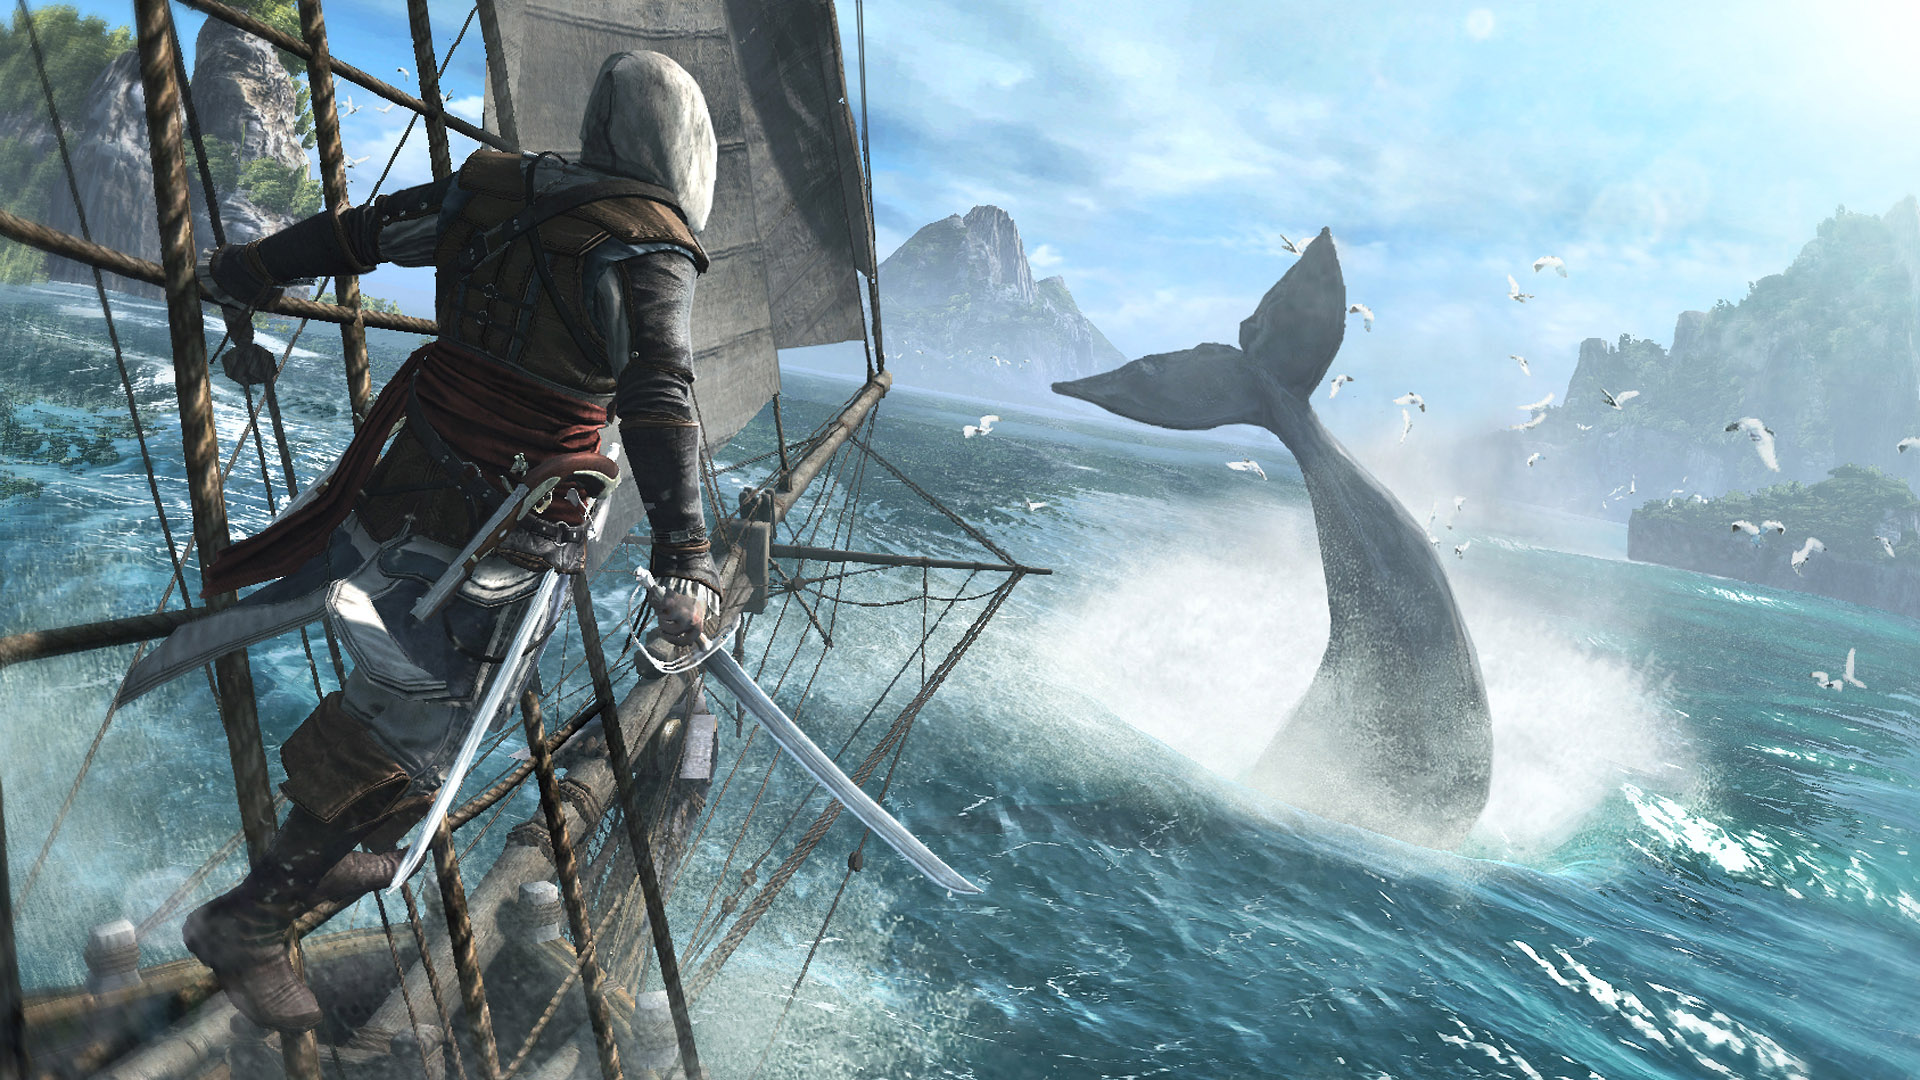 Скриншот *Assassin's Creed IV: Black Flag [PS4] 5.05 / 6.72 / 7.02 [EUR] (2013) [Русский] (v1.04)*